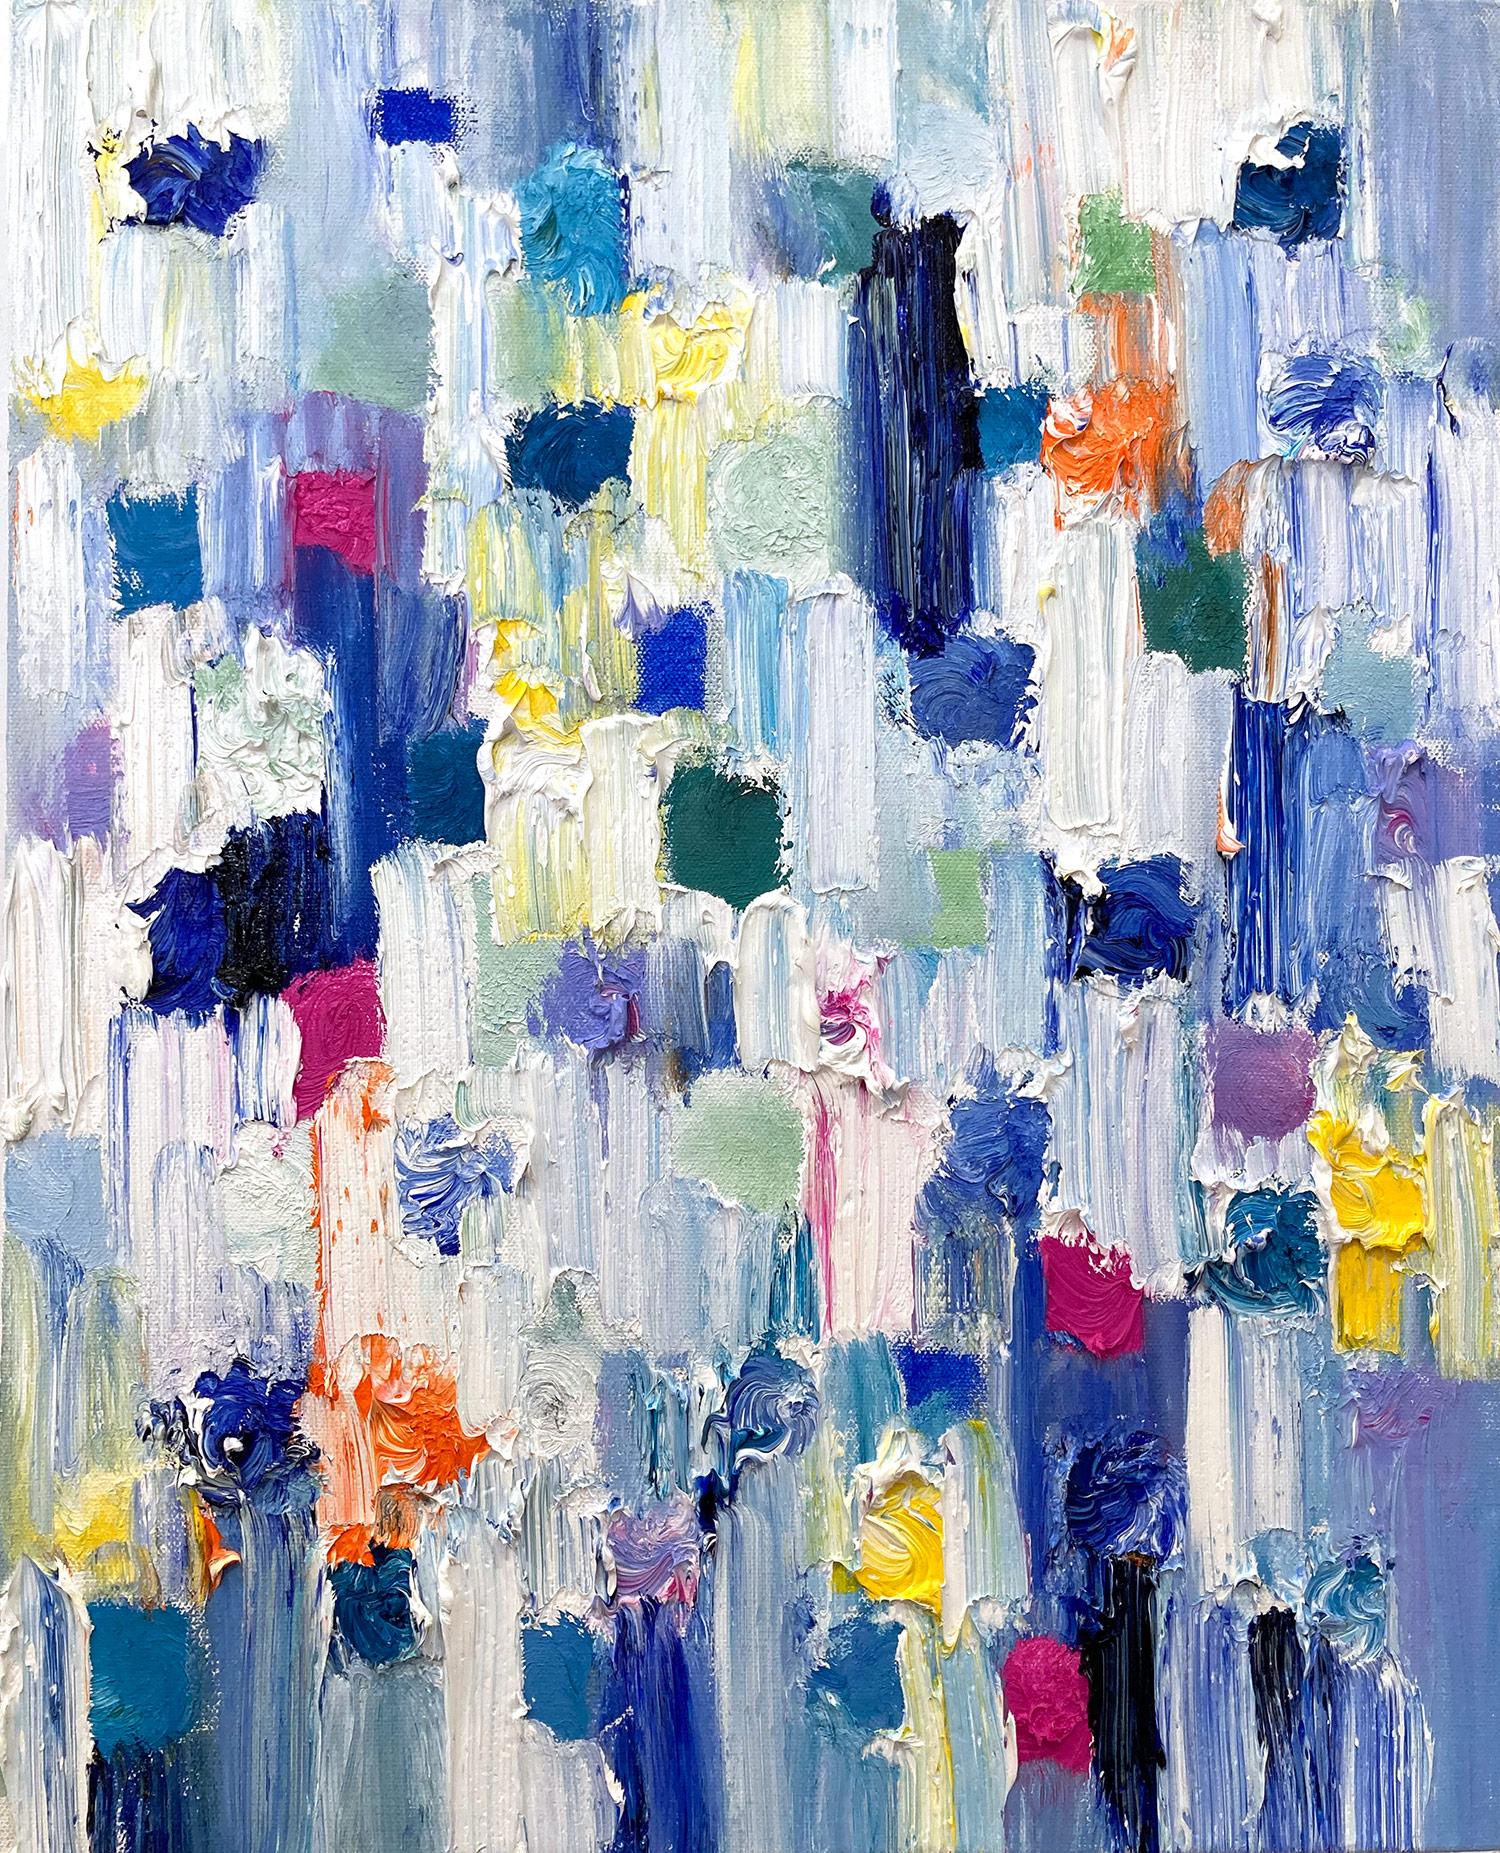 Abstract Painting Cindy Shaoul - Dripping Dots - Springtime in Rome - Peinture à l'huile abstraite colorée sur toile